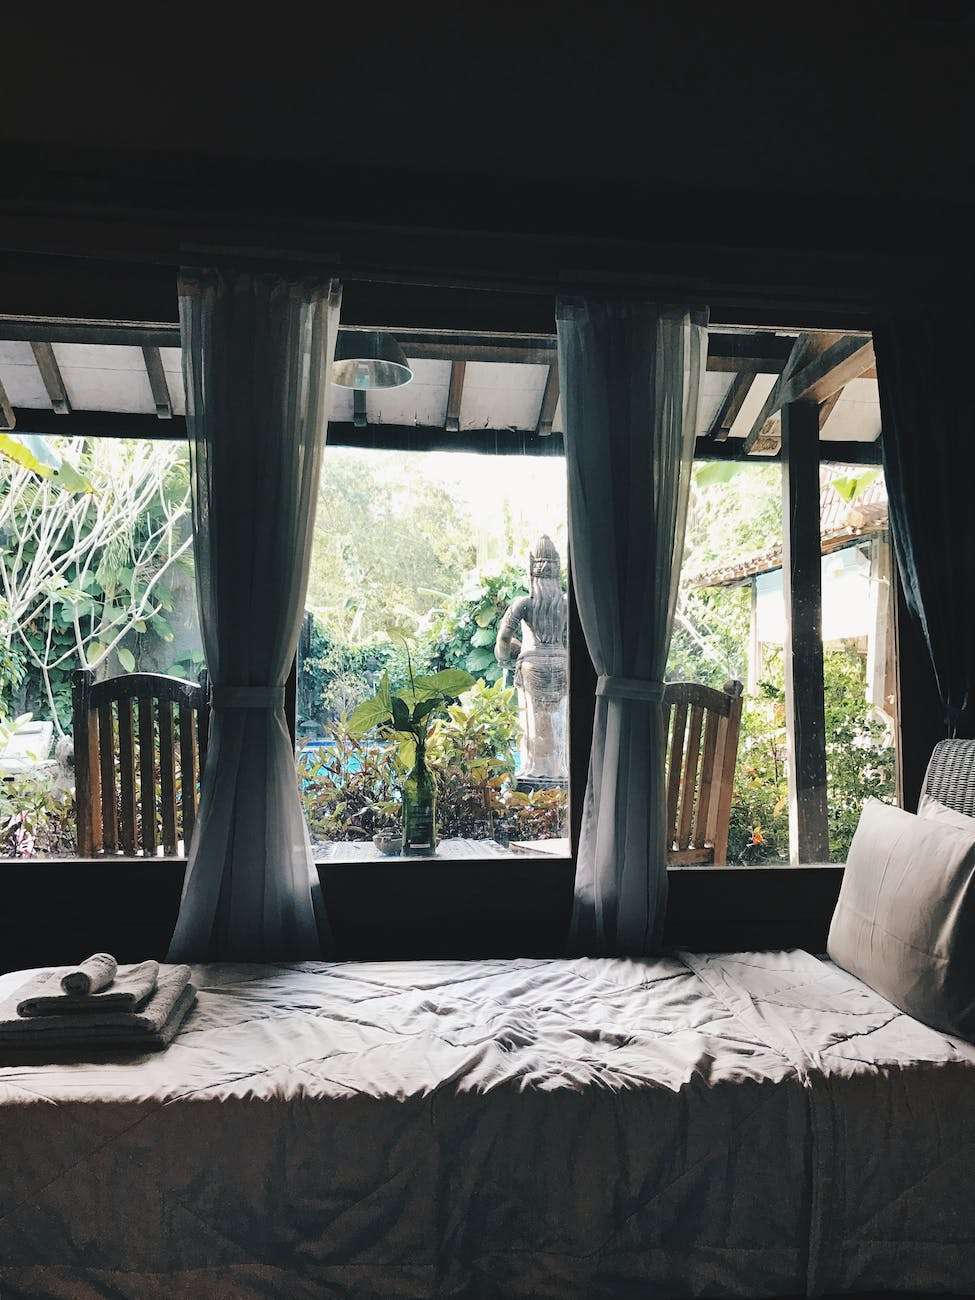 white bed near window